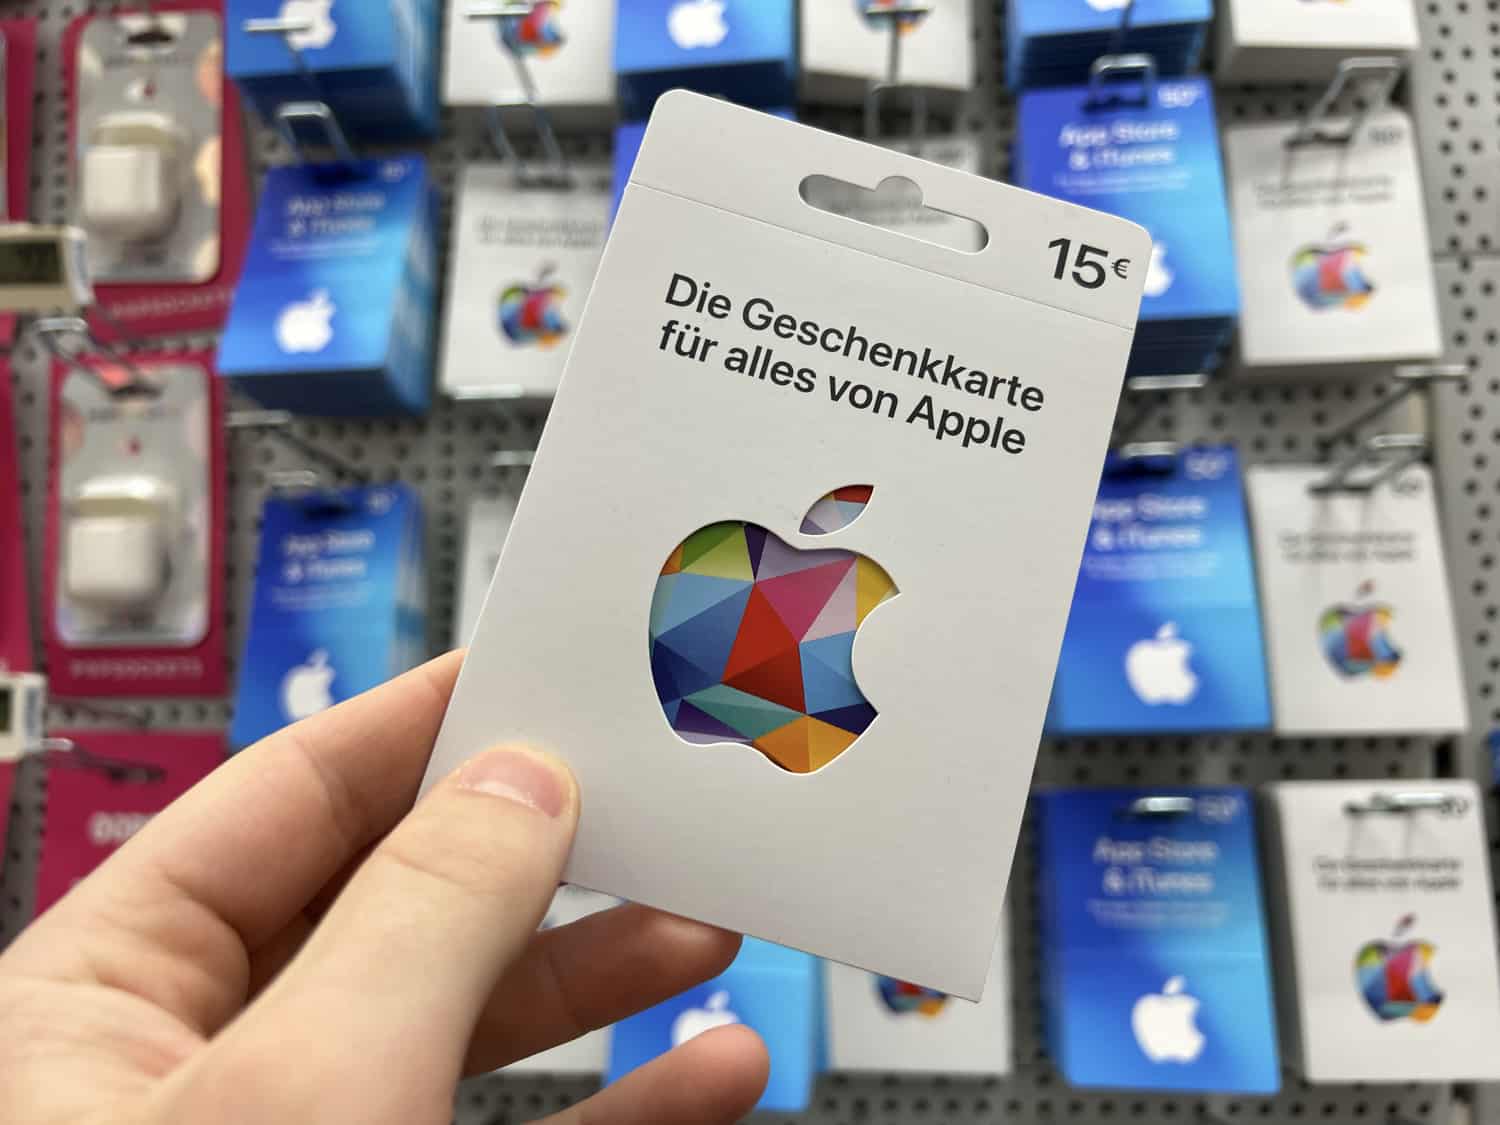 Apple Gift Card 125 EURO (10% Rabatt)